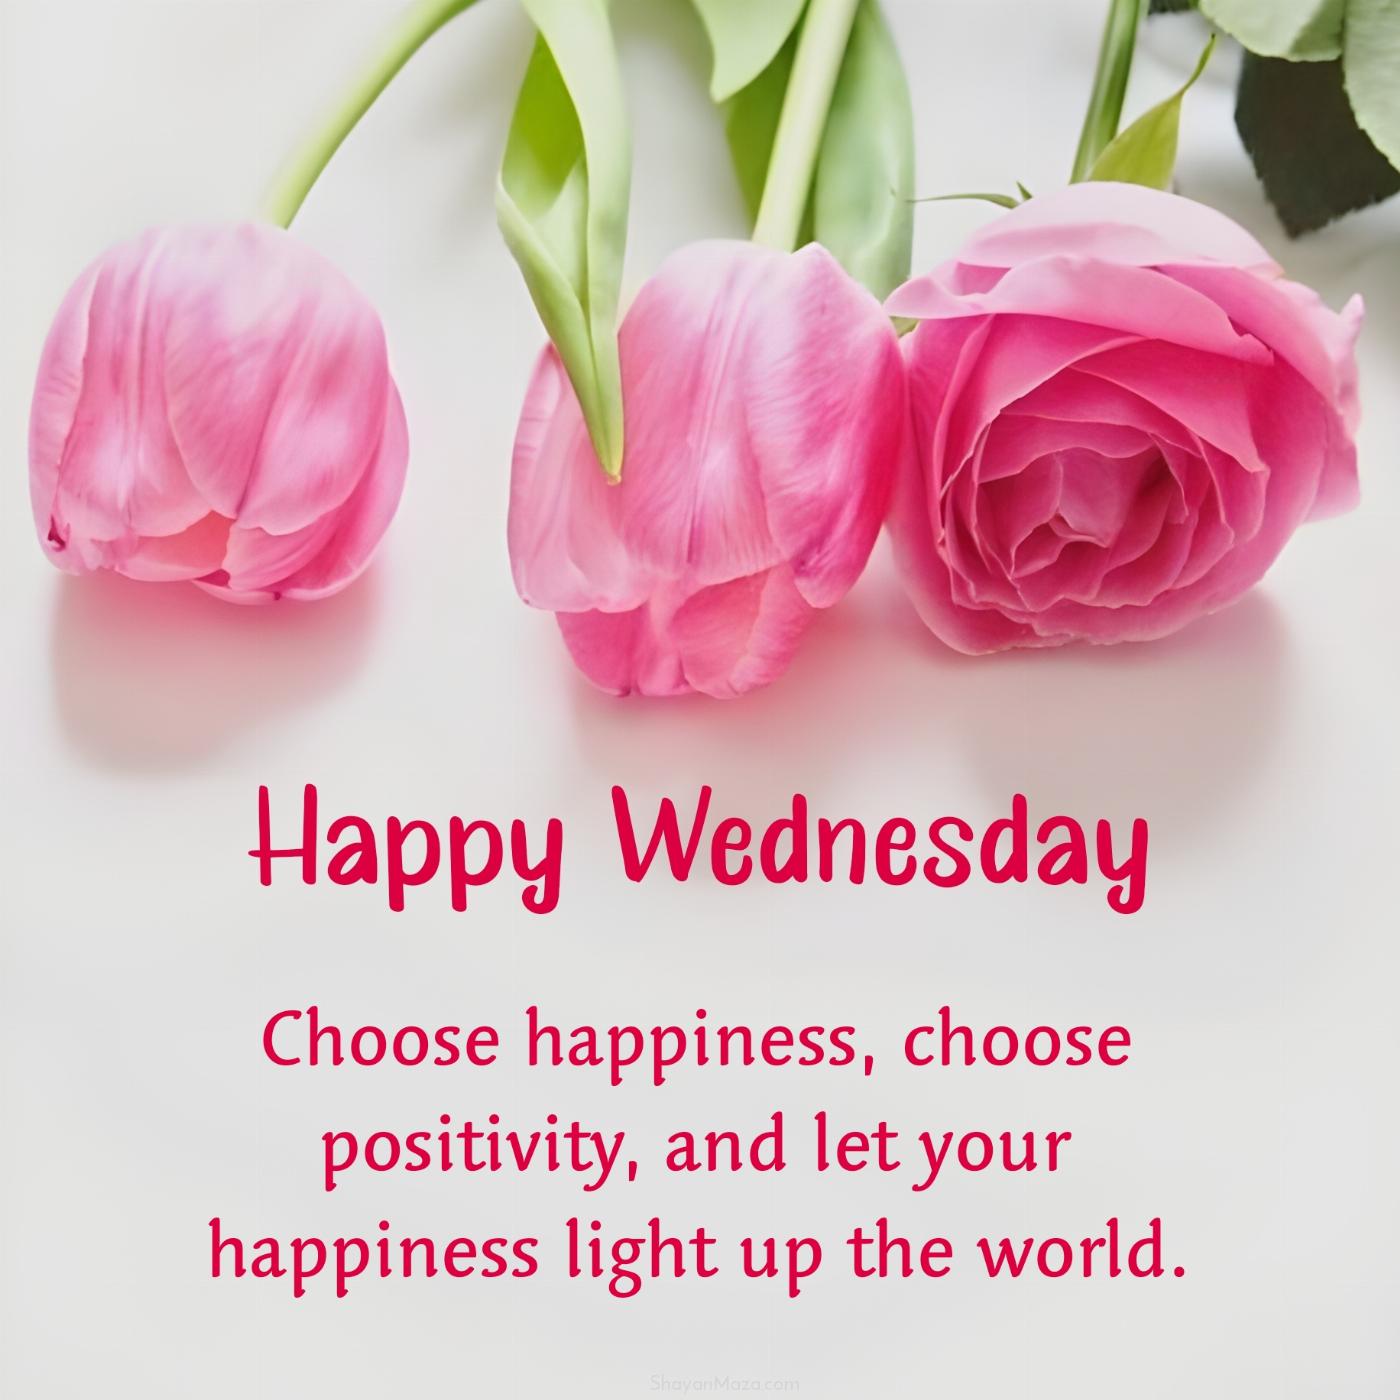 Happy Wednesday! Choose happiness choose positivity